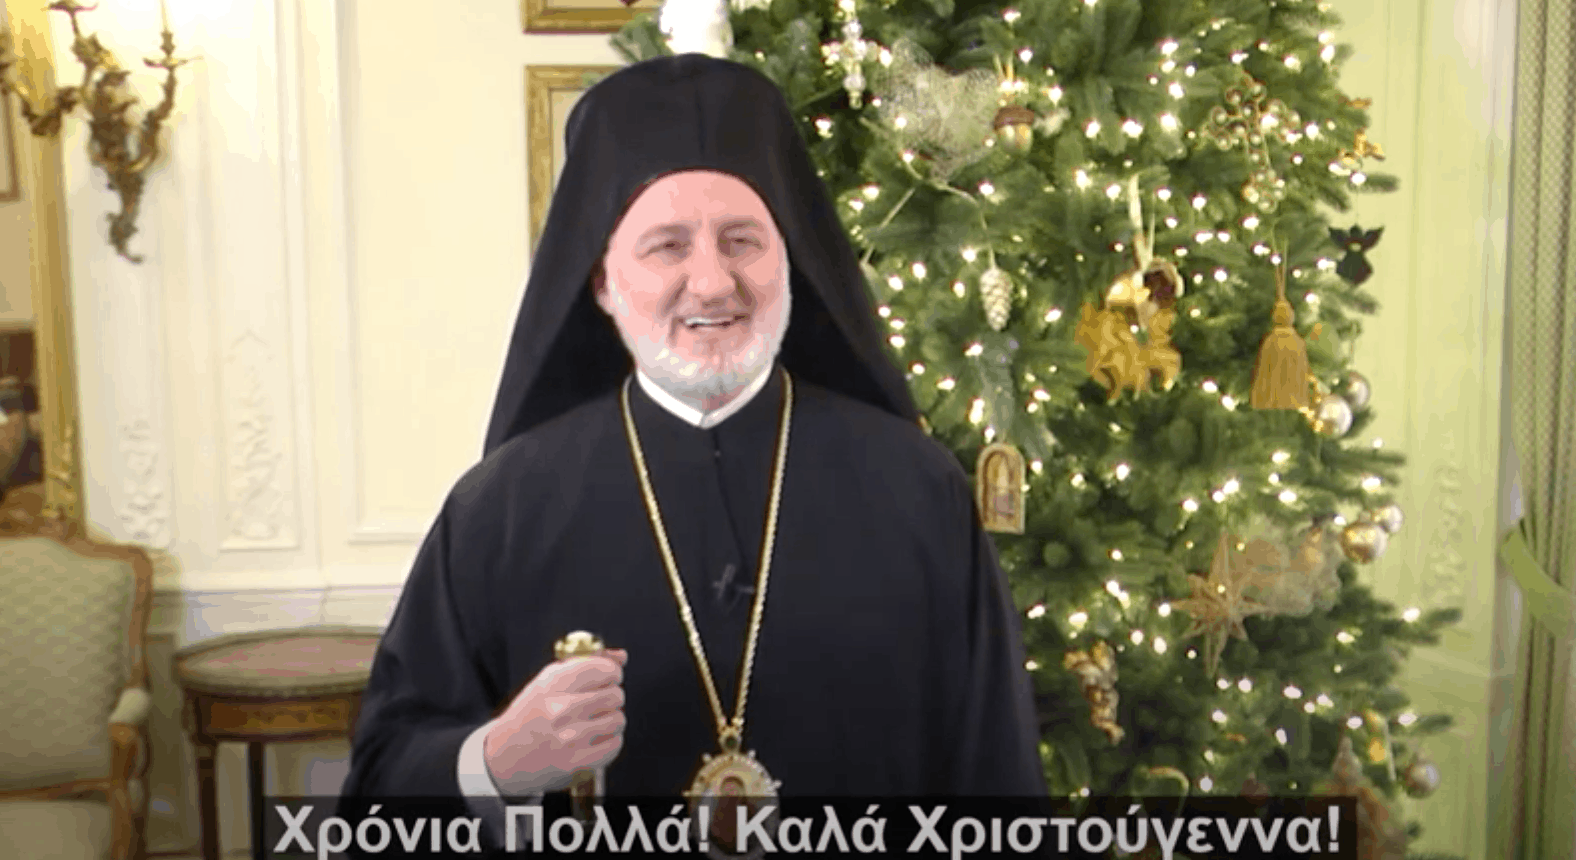 His Eminence Archbishop Elpidophoros Of America - 2020 Christmas Message